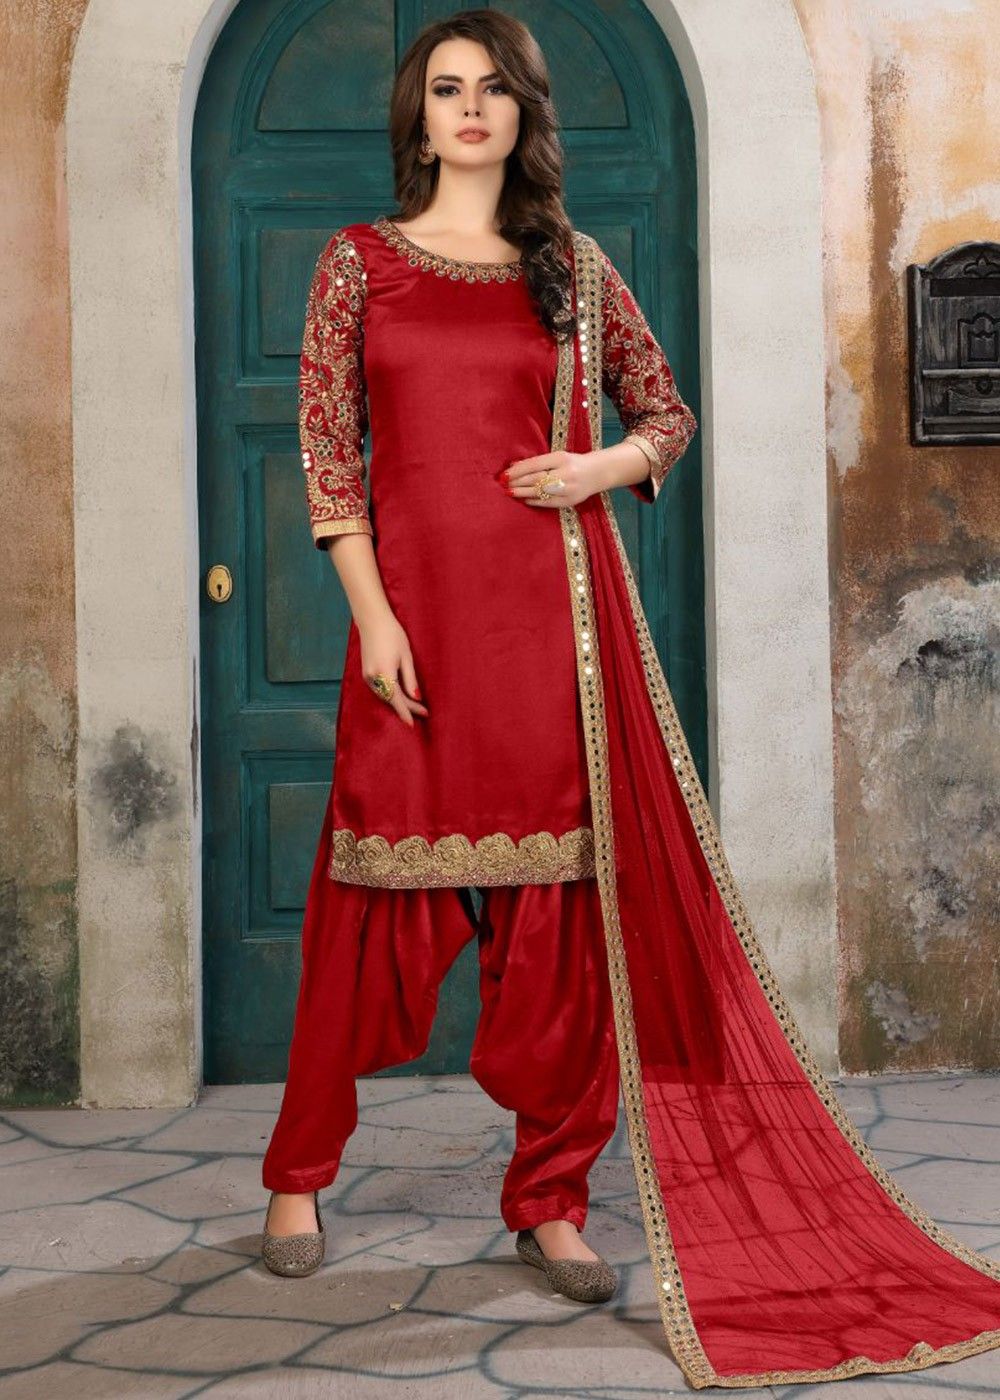 Black And Red Punjabi Dress Sale Online ...